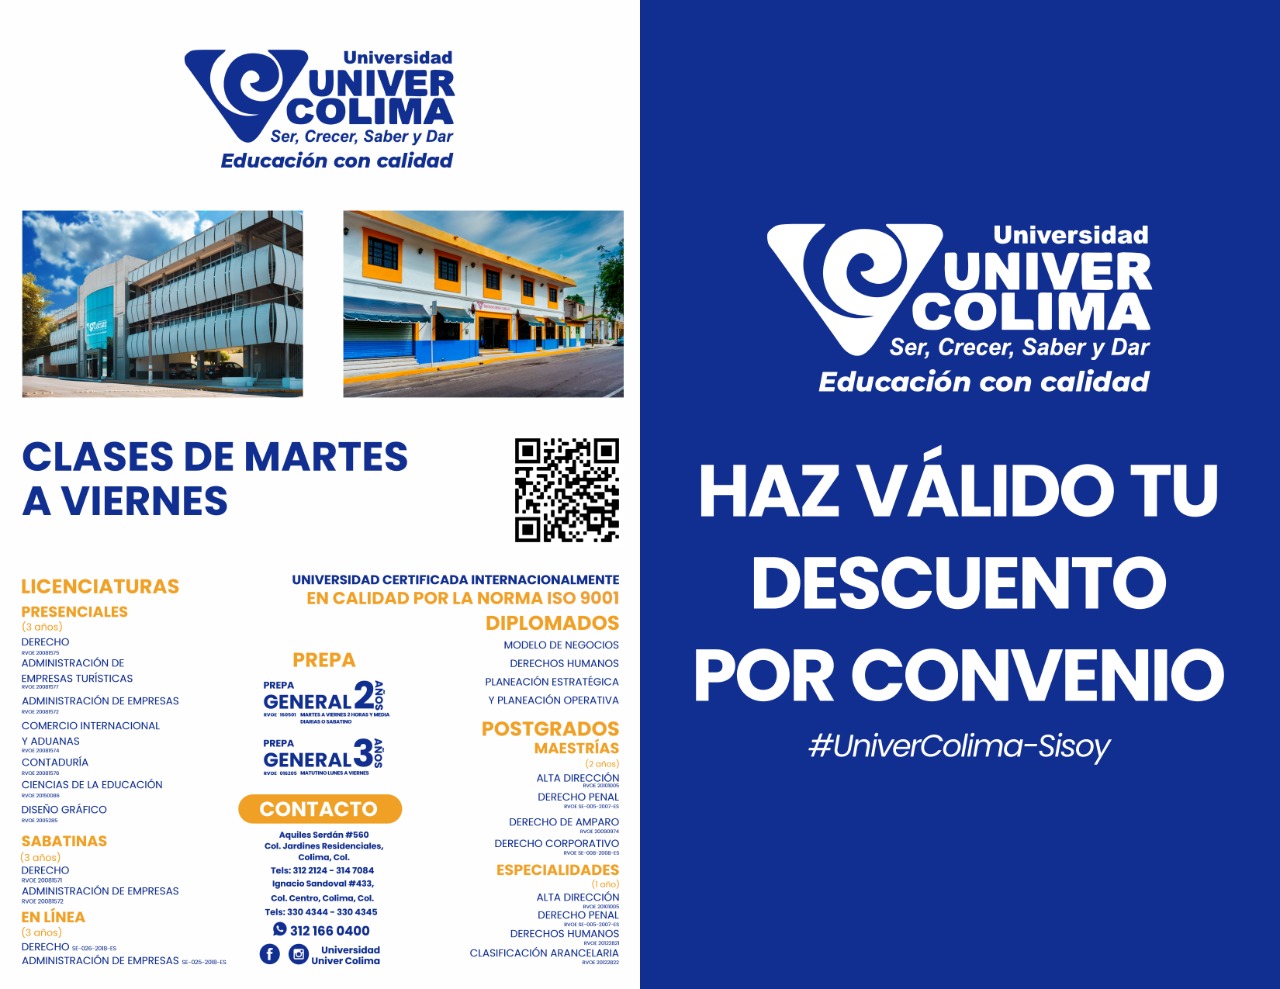 Universidad UNIVER Colima